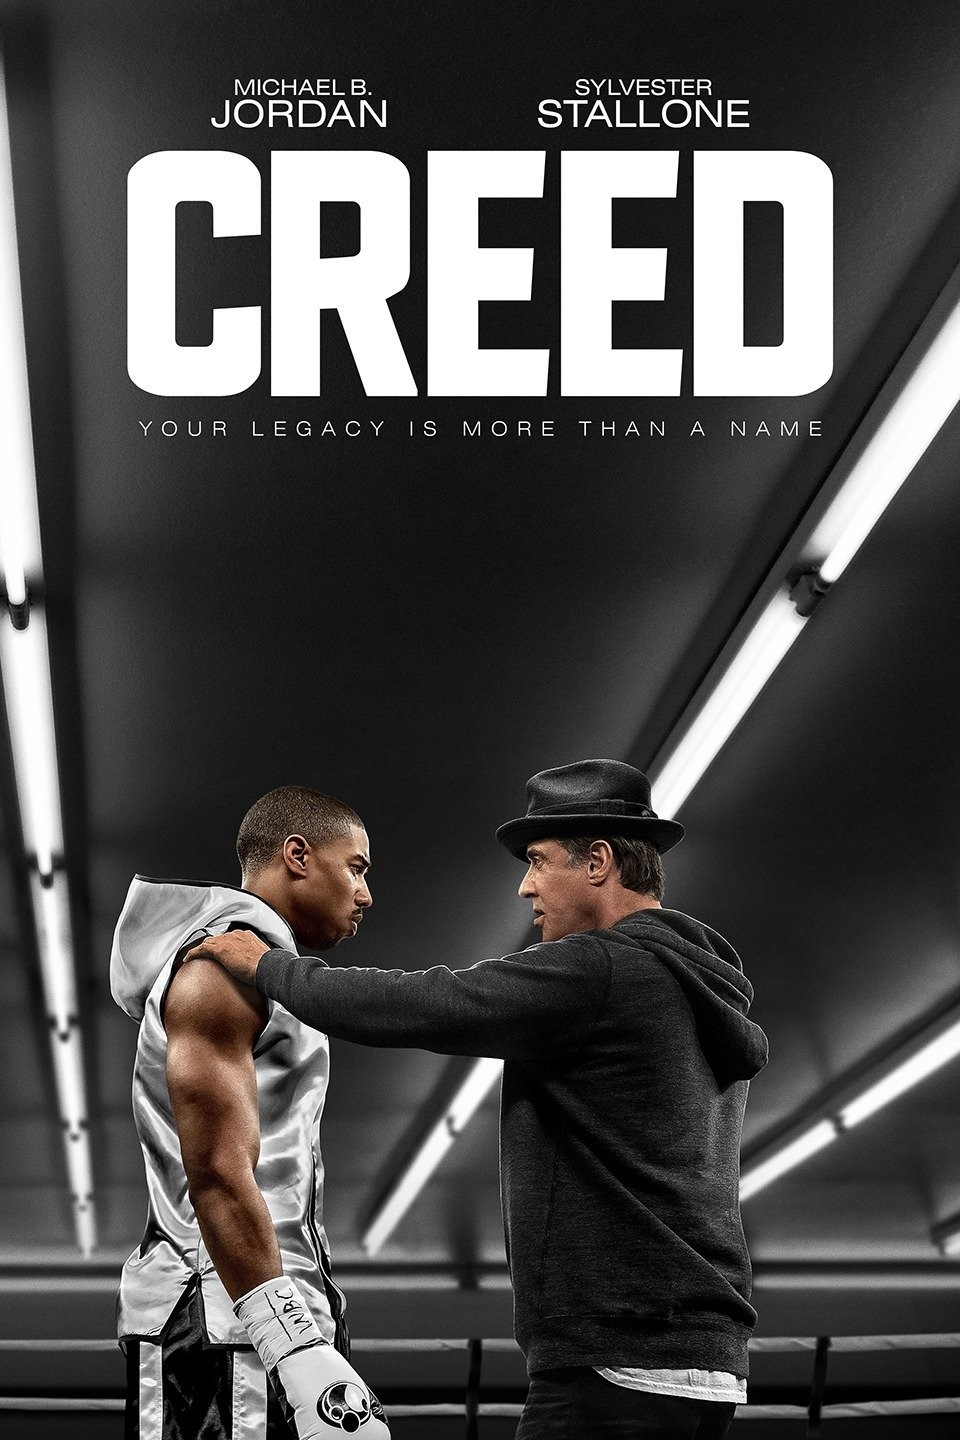 Creed: Nascido para Lutar - Trailer Oficial 1 (leg) [HD] 